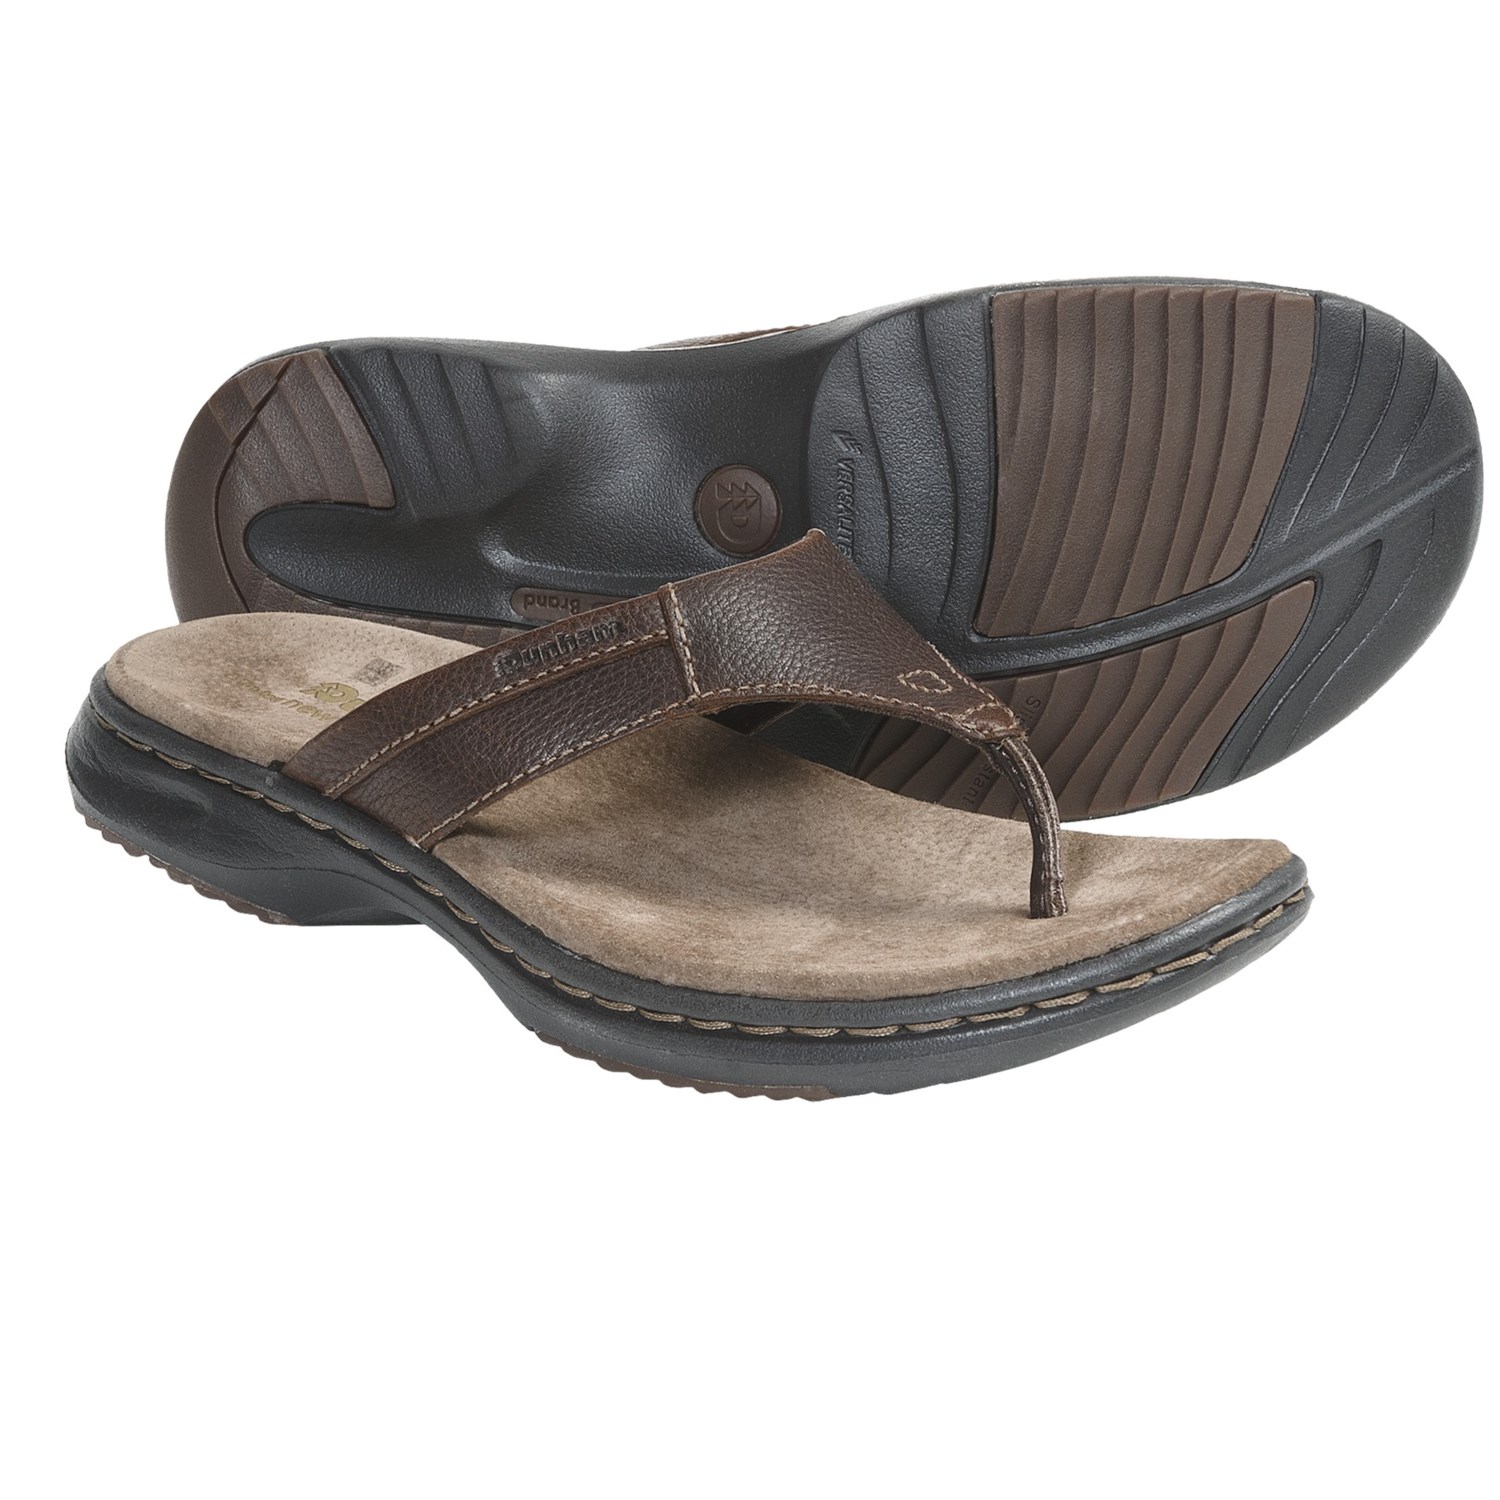 Dunham Biscayne Sandals (For Men) - Save 44%